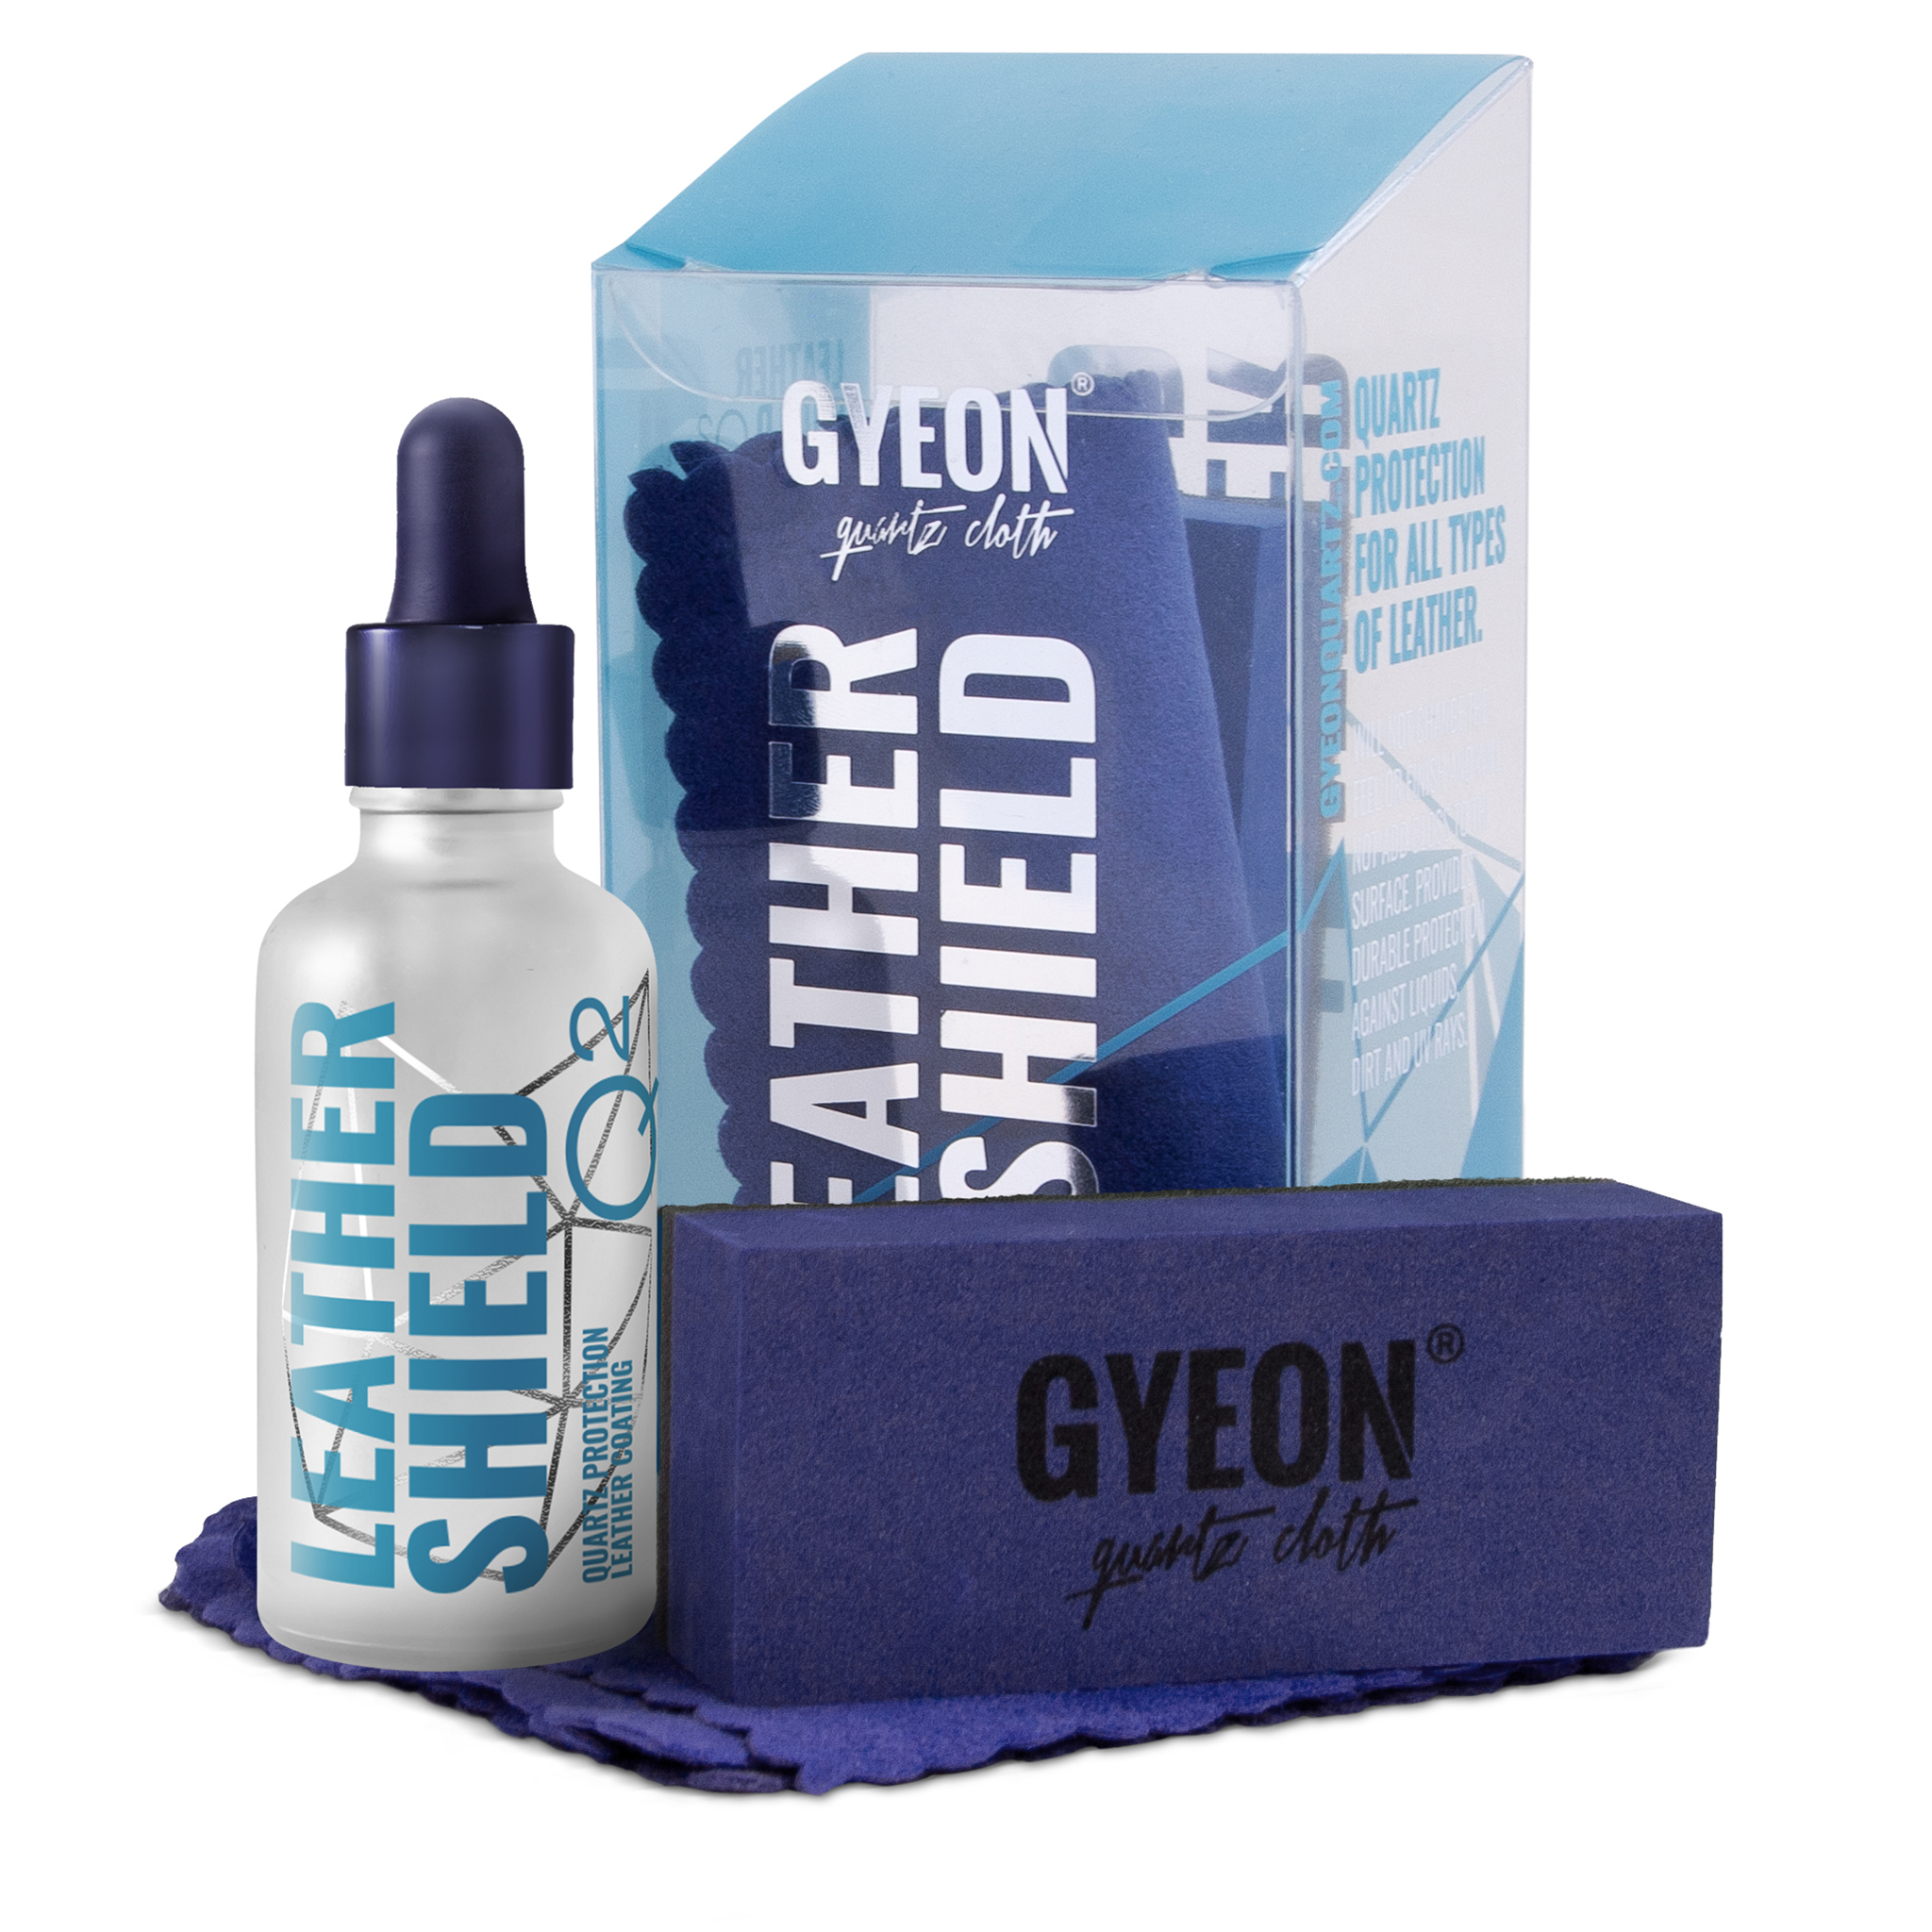 Skinnforsegling Gyeon Q2 LeatherShield, 50 ml